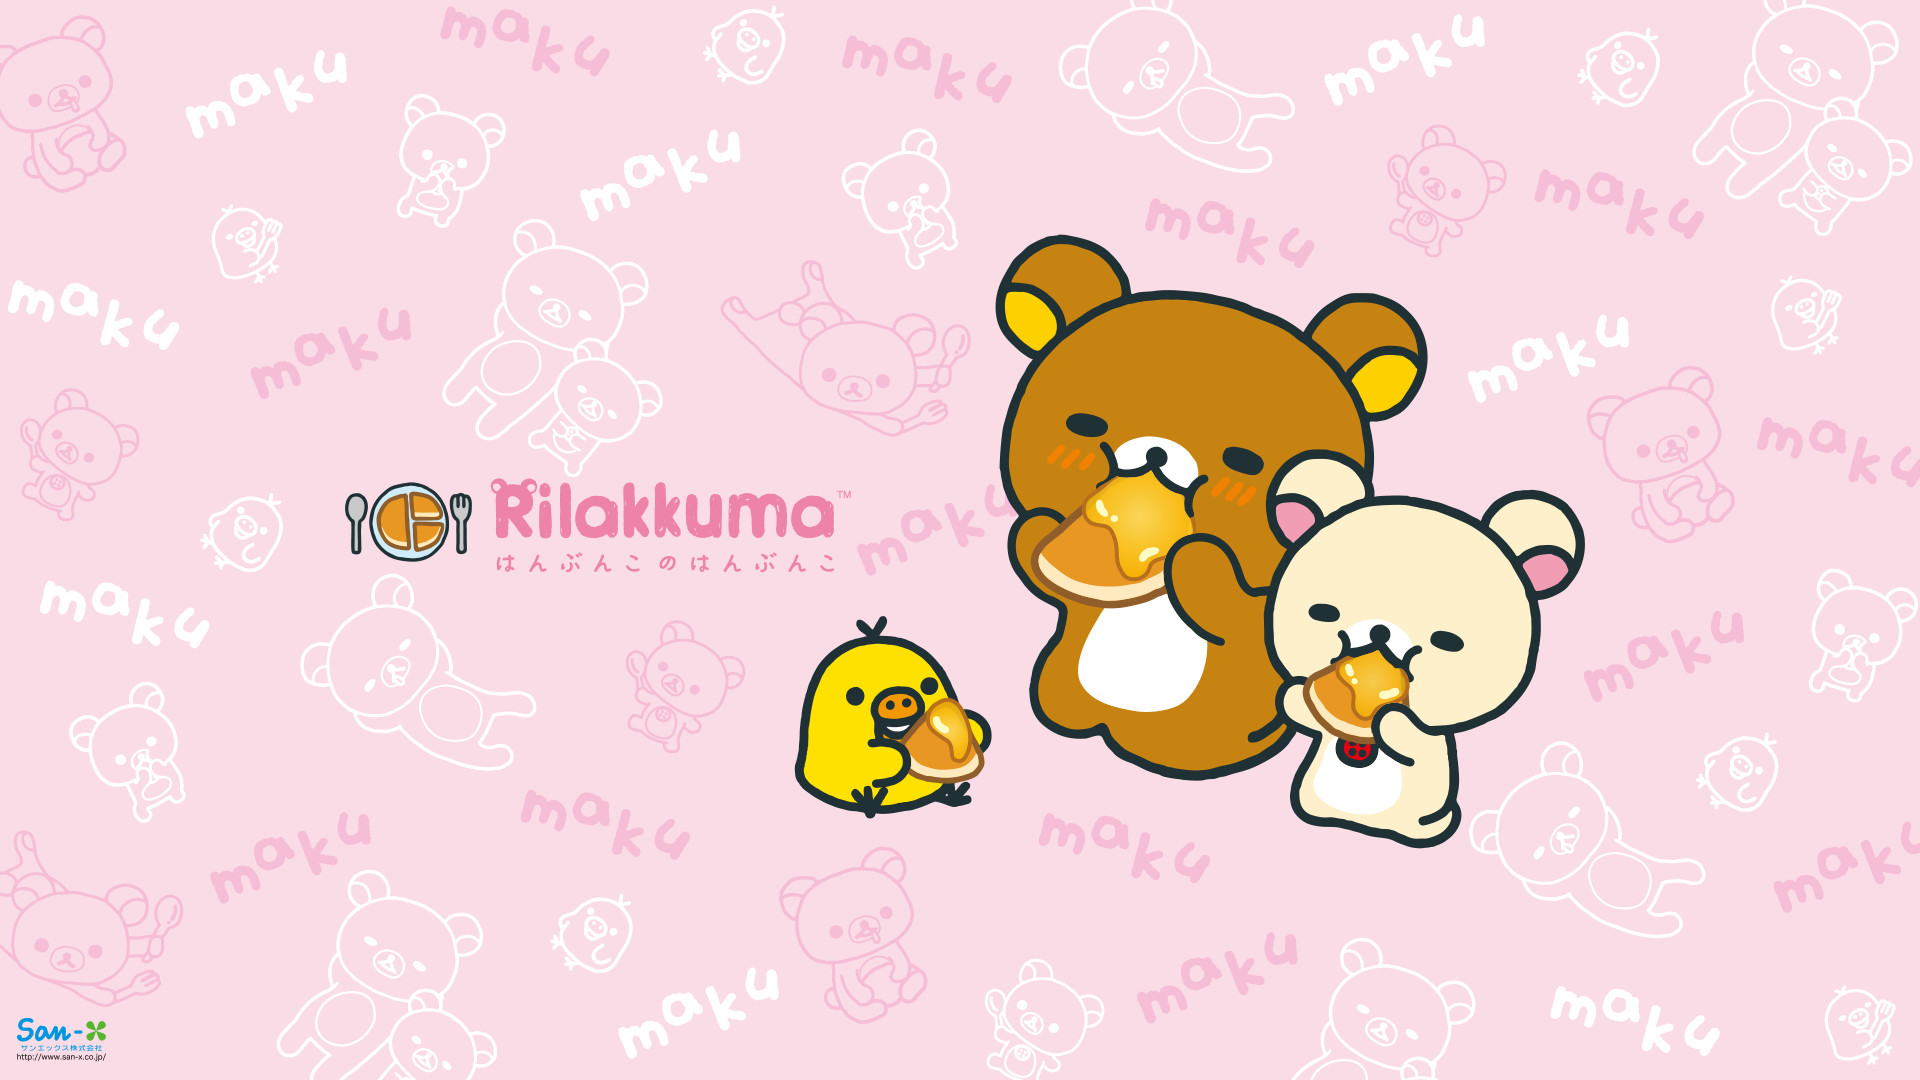 All about Hello Kitty to Rilakkuma and every kawaii cuteness